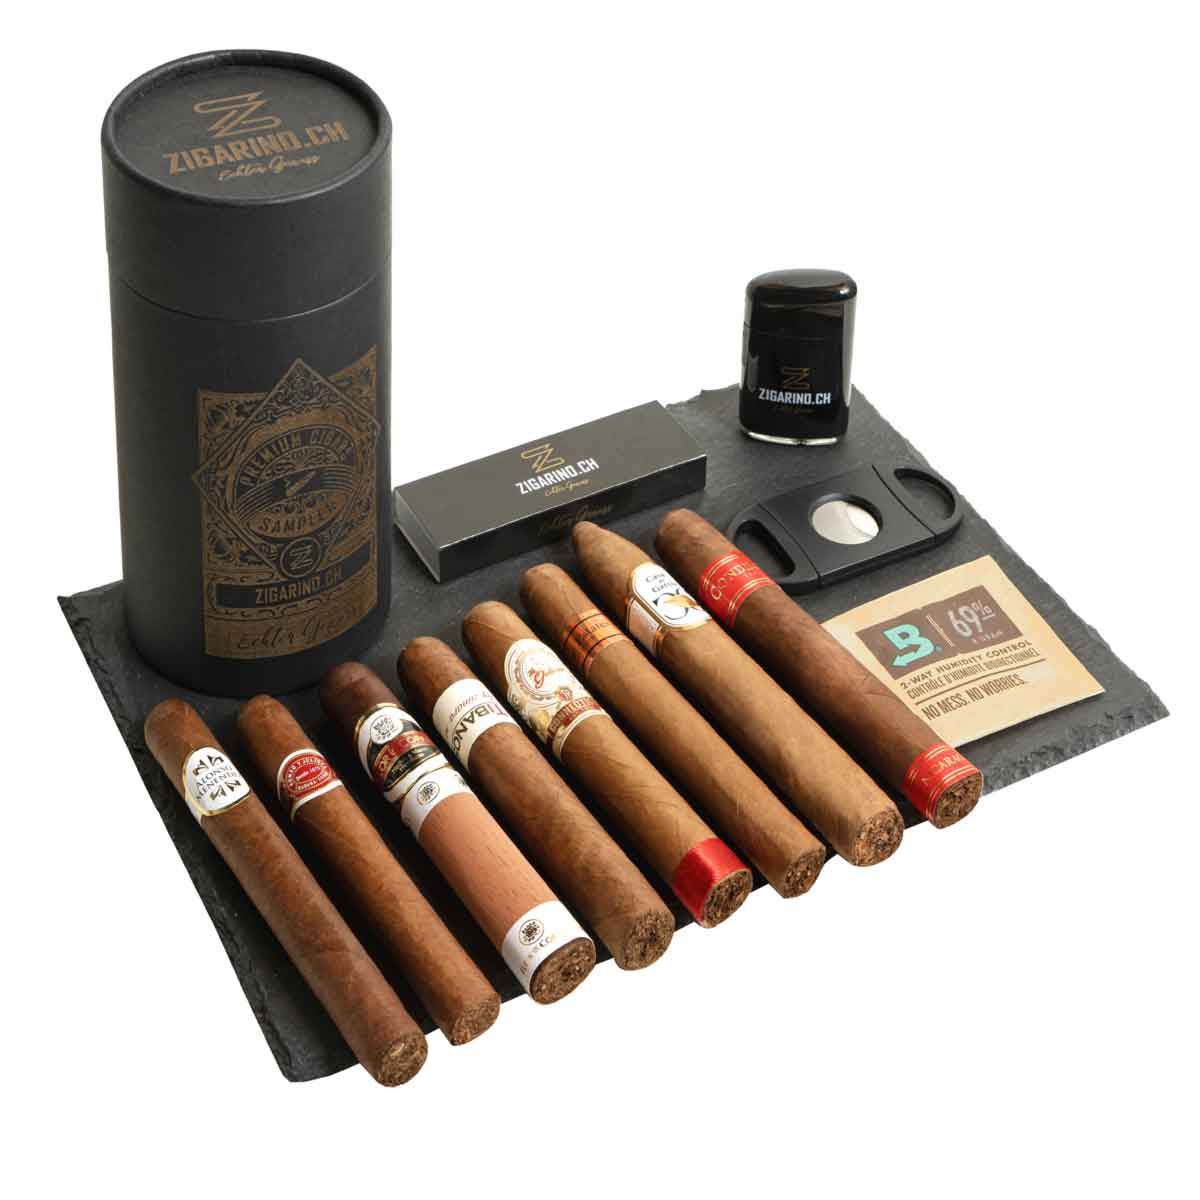 Starter Seleccion Cigars Zigarino